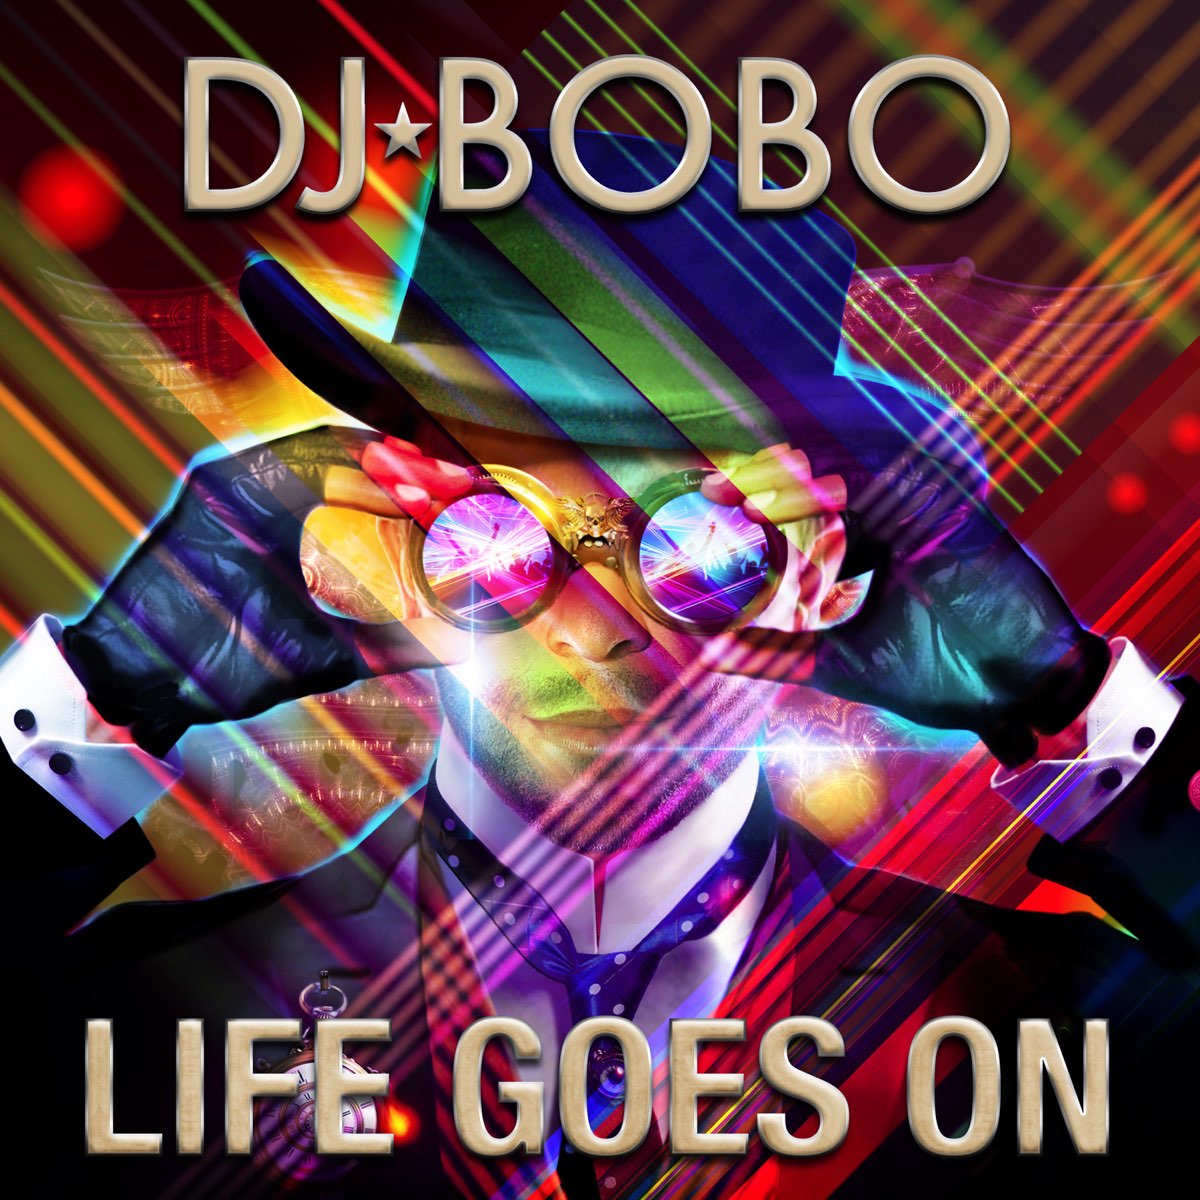 DJ Bobo. DJ Bobo обложка. DJ Bobo рисунок. Обложка песни Life goes on. Бобо 5